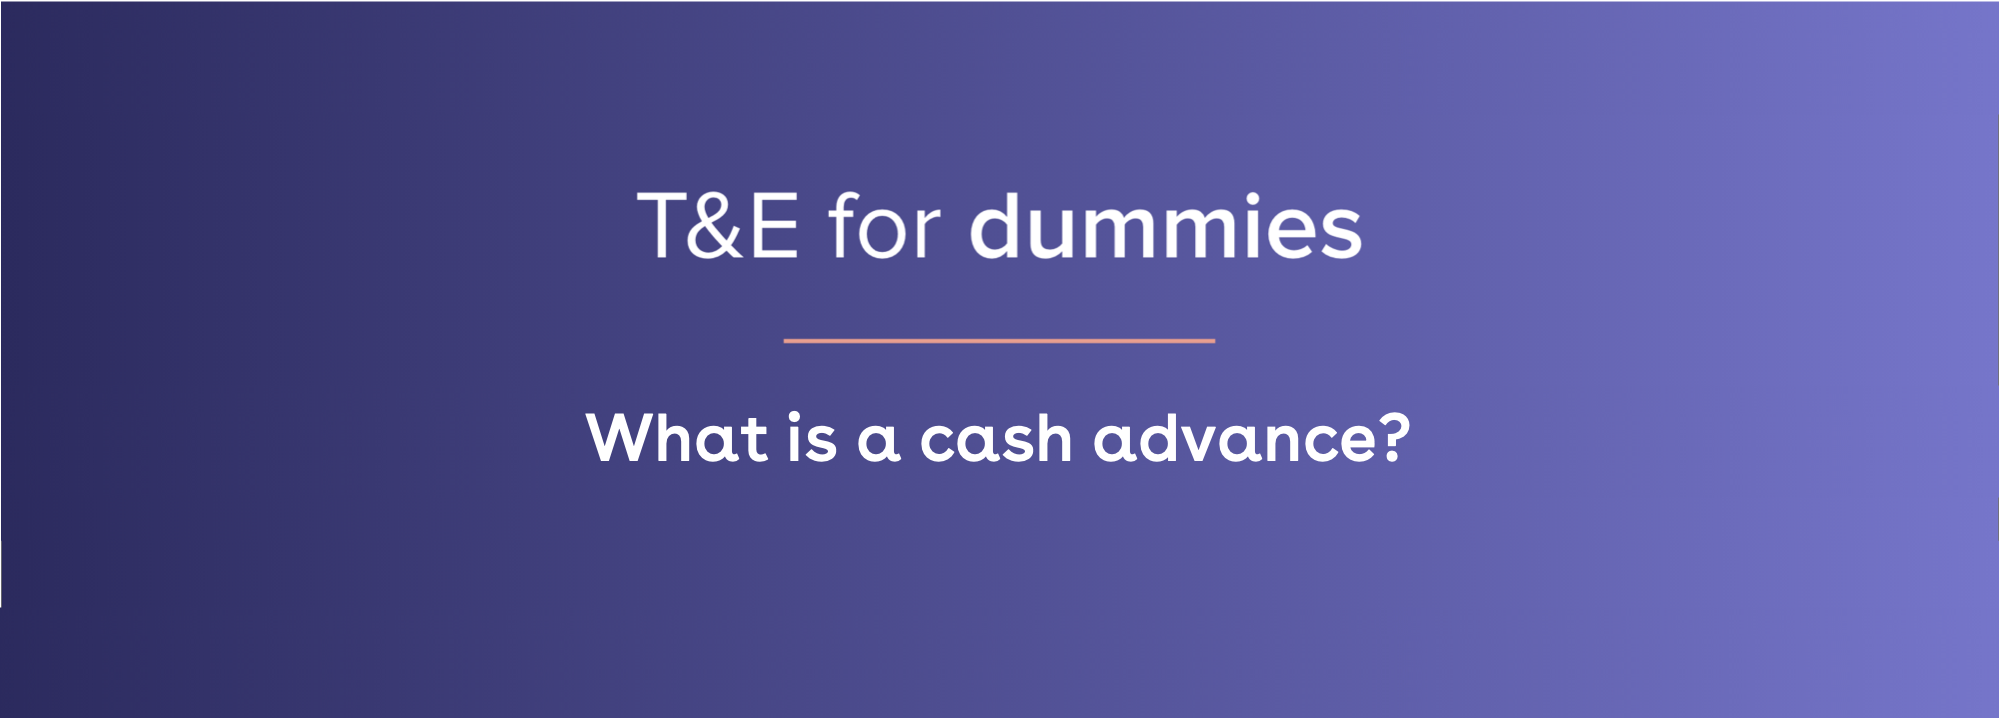 what is a cash advance?